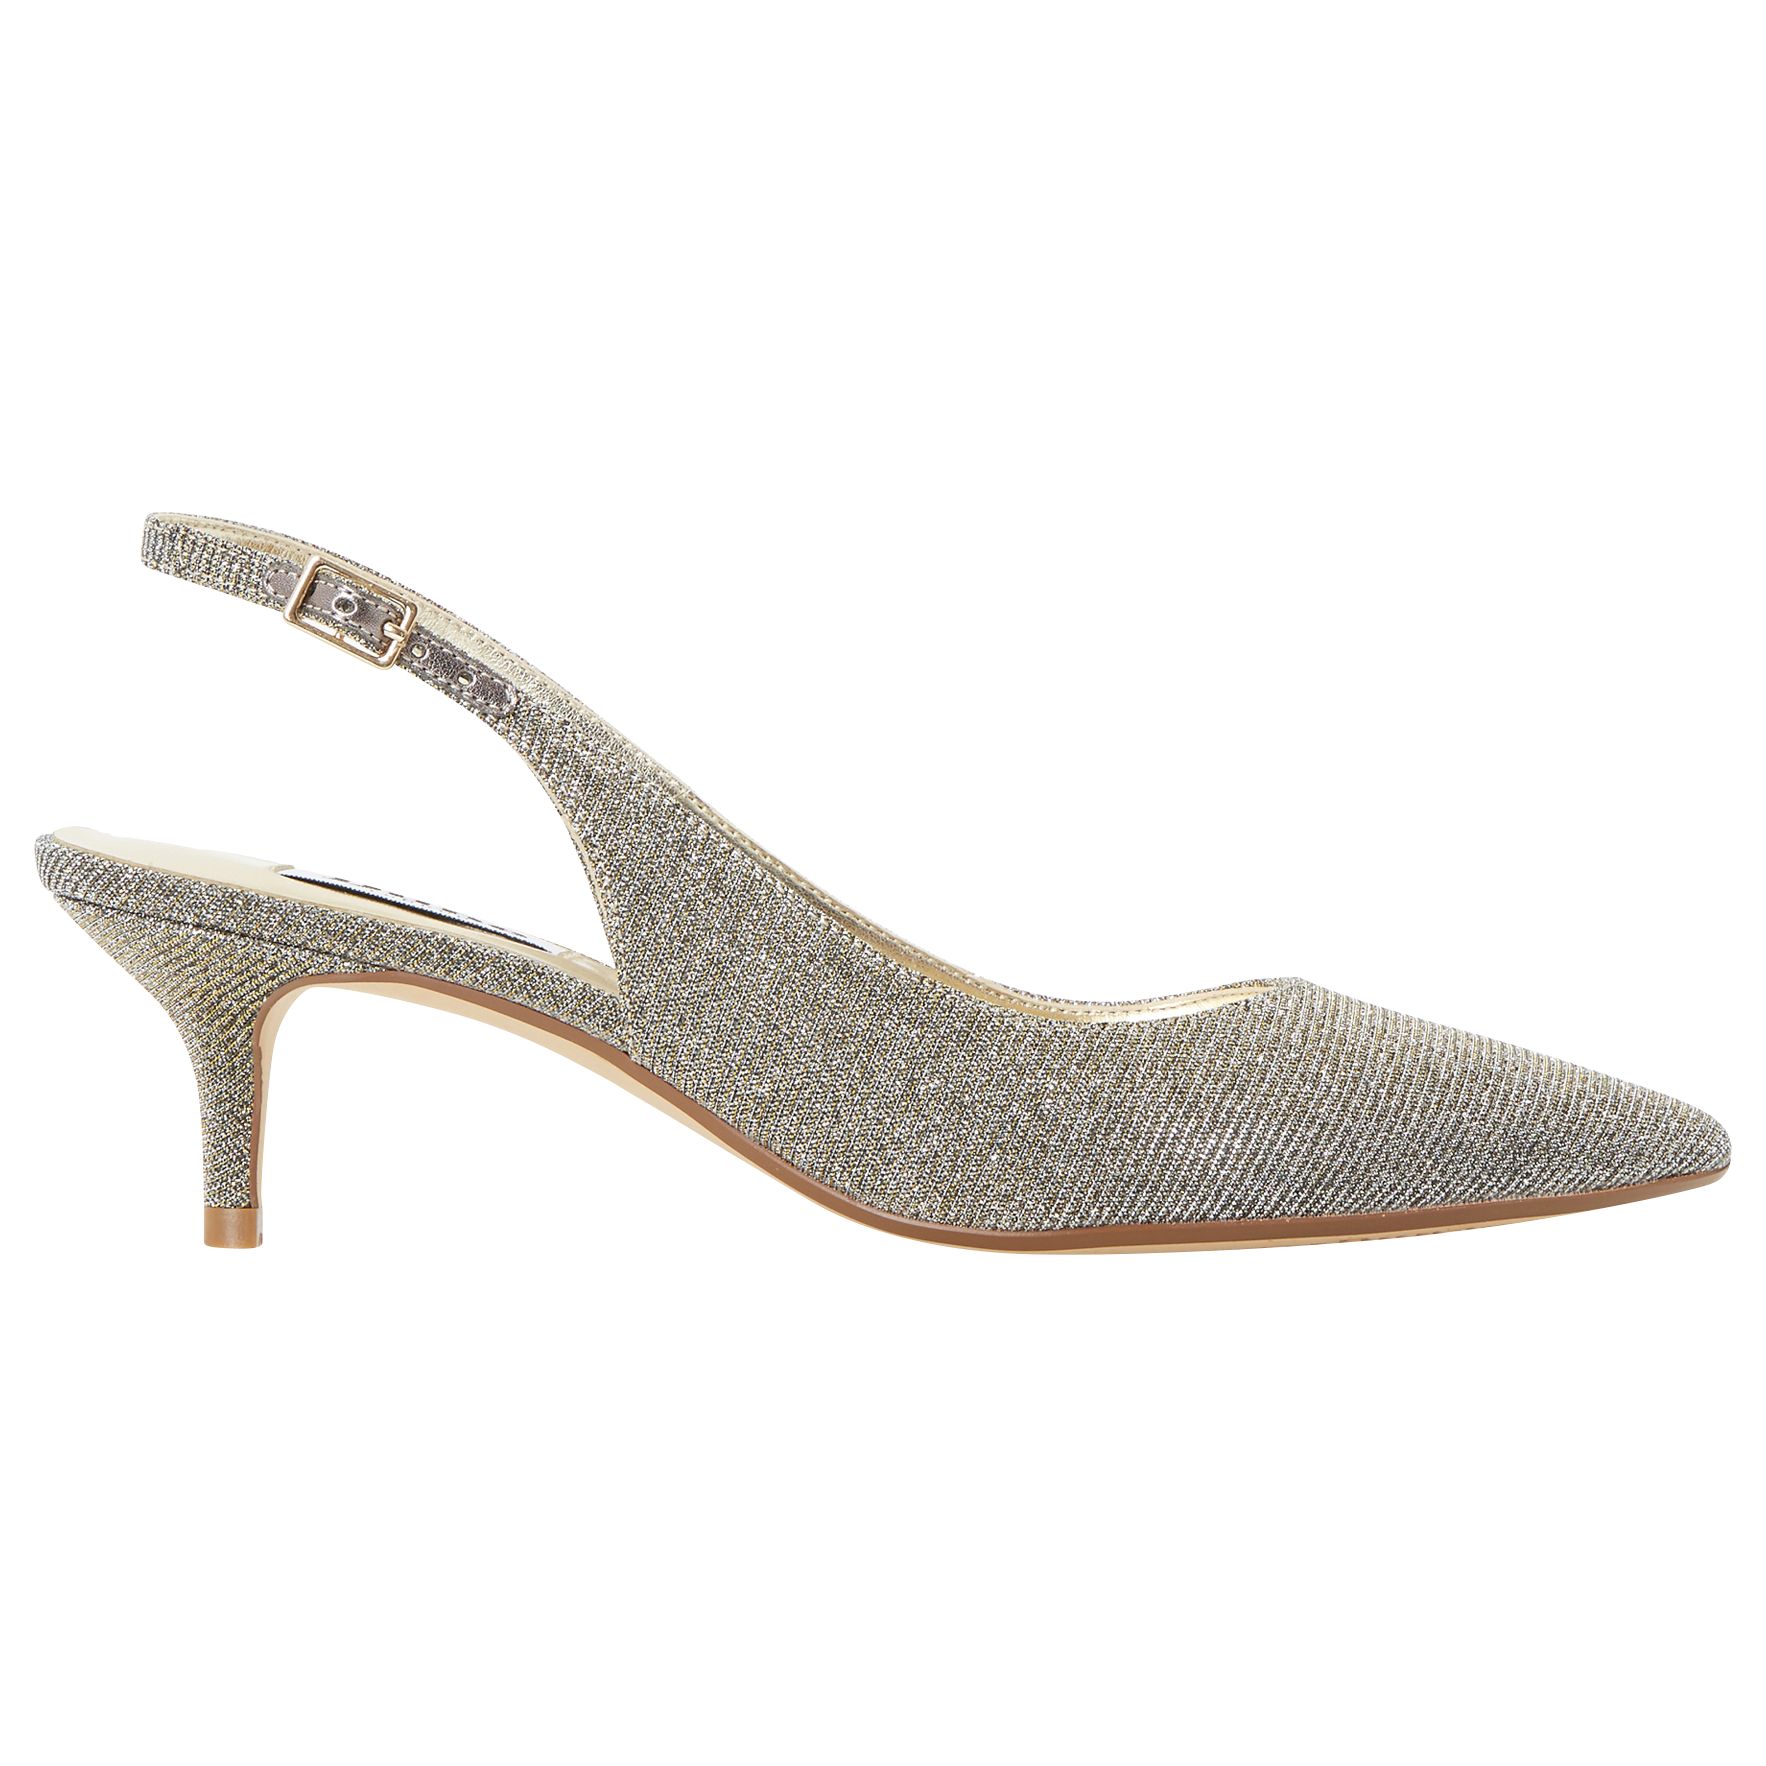 Dune Casandra Kitten Heel Slingback Court Shoes, Gold Fabric, 6